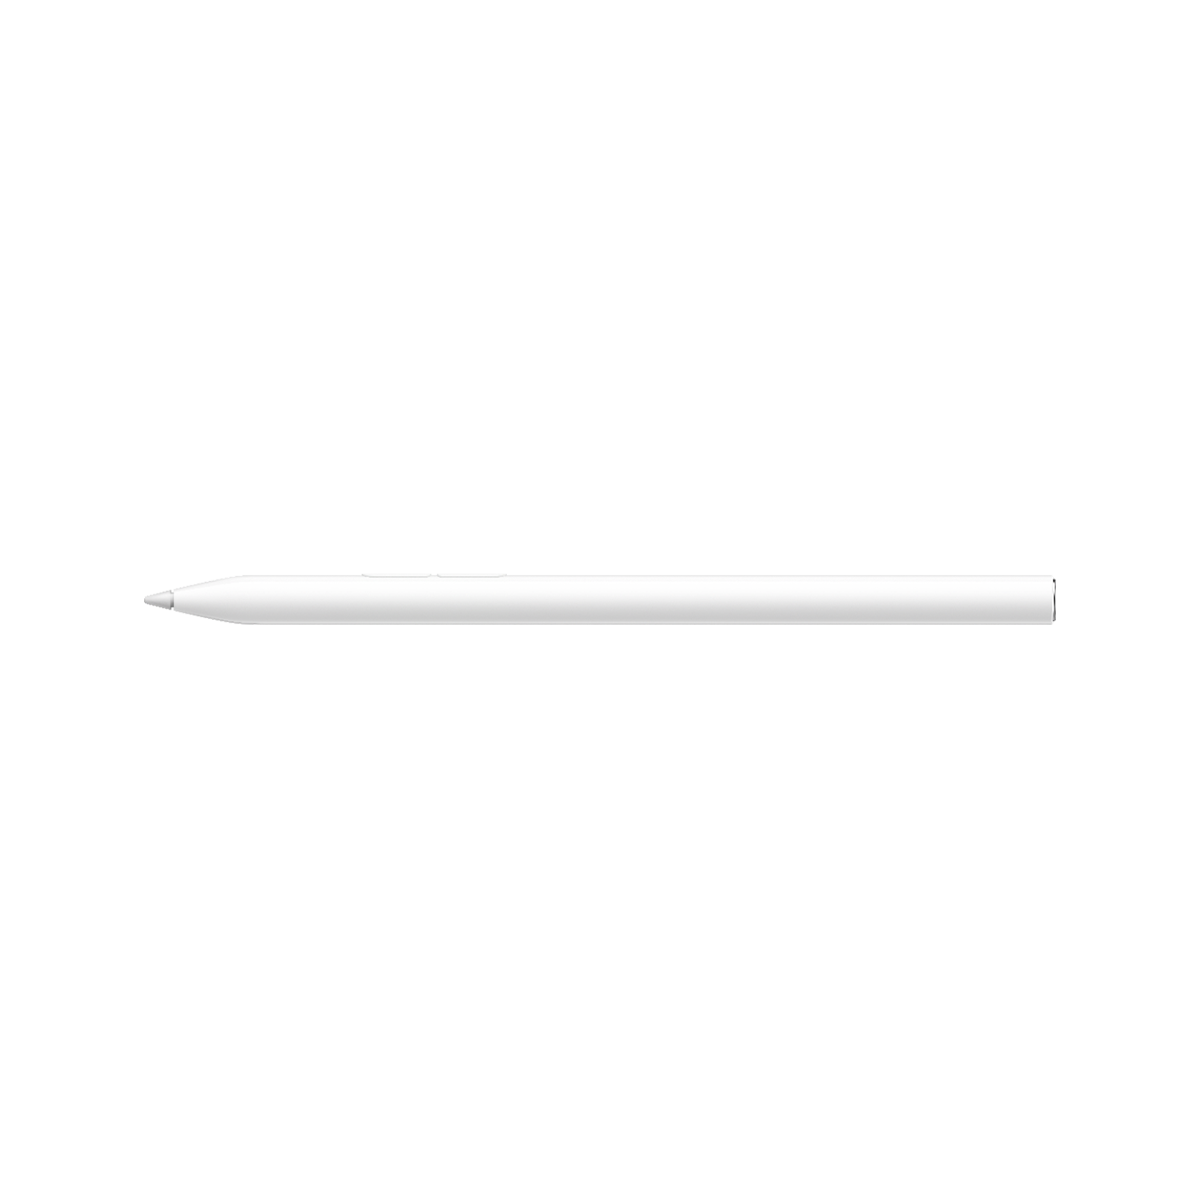 Xiaomi Smart Pen (2nd generation)